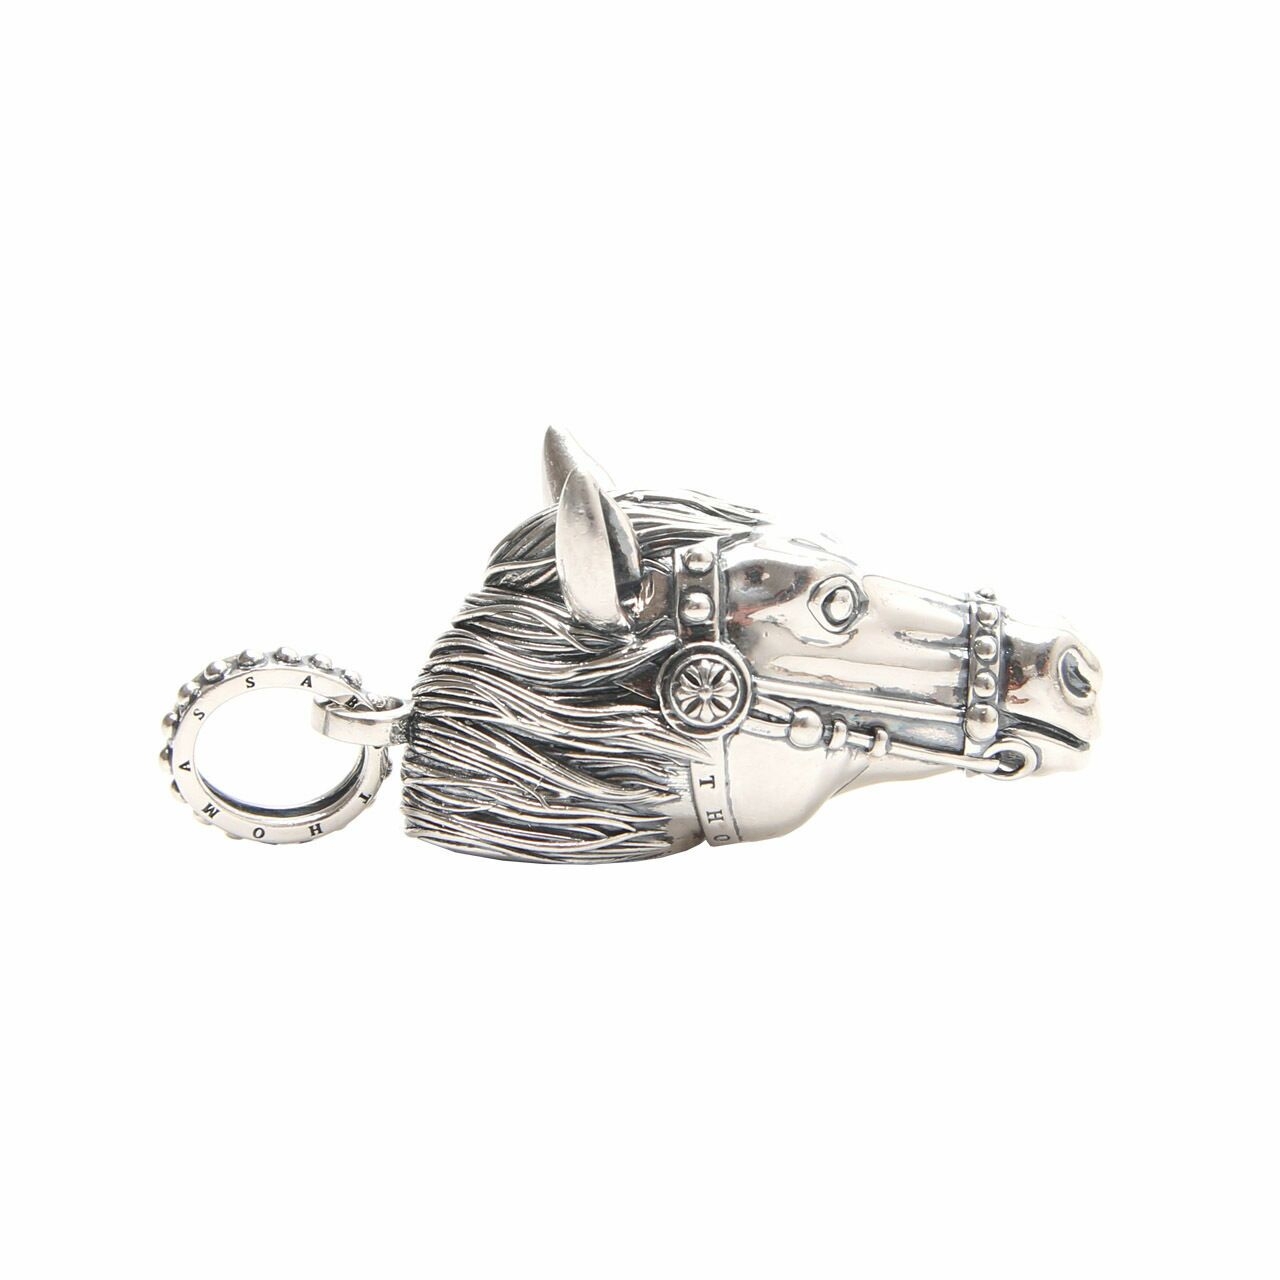 Thomas Sabo Silver Pendant Horse Charm Jewelry